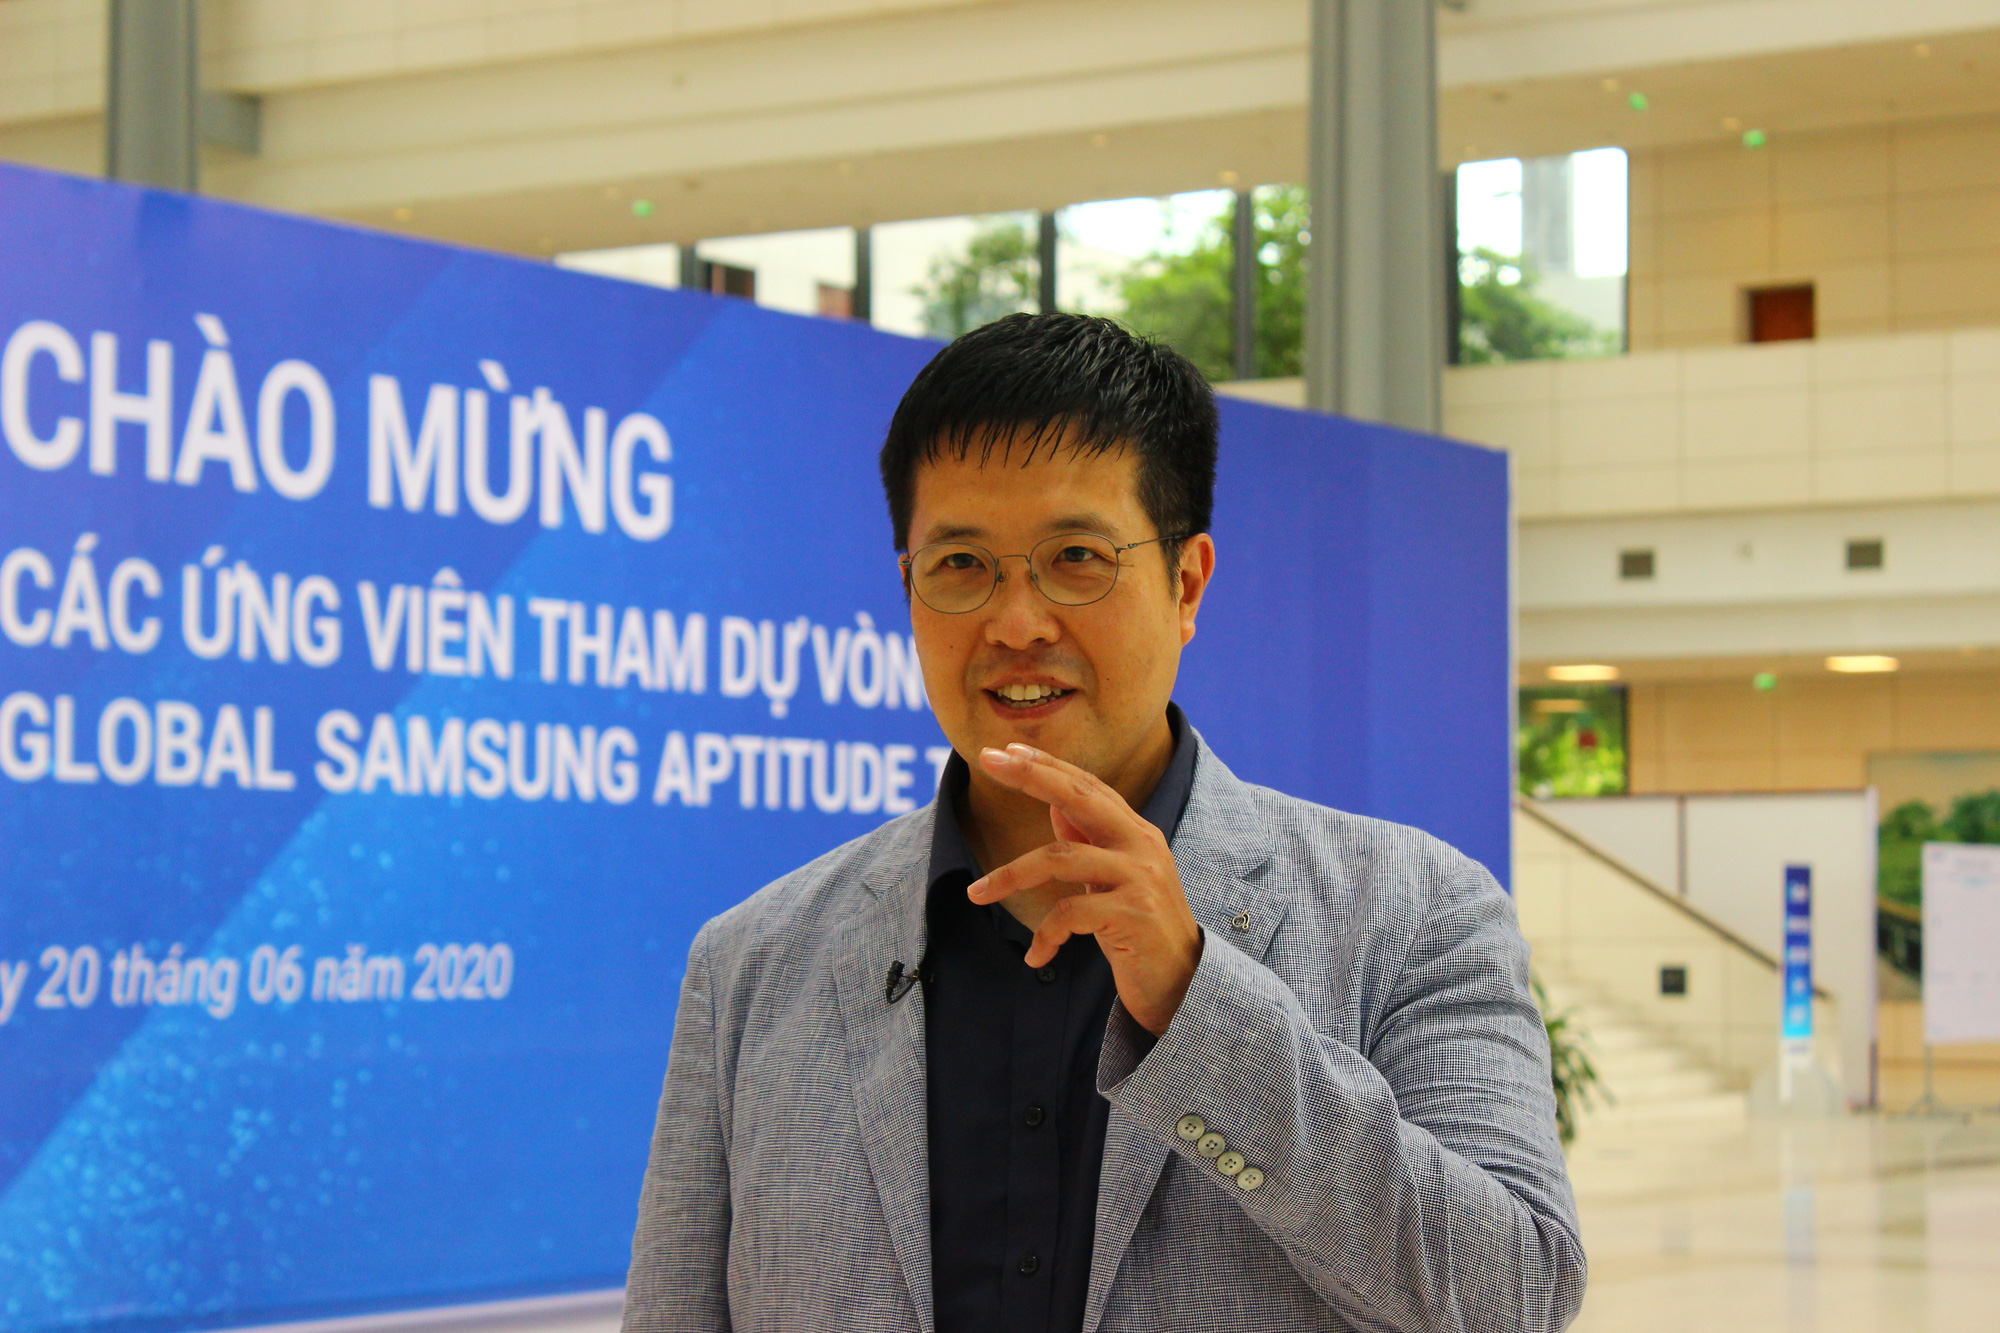 Jang Joon Hyuk, general manager of Samsung Vietnam’s recruitment office. Photo: D.T. / Tuoi Tre